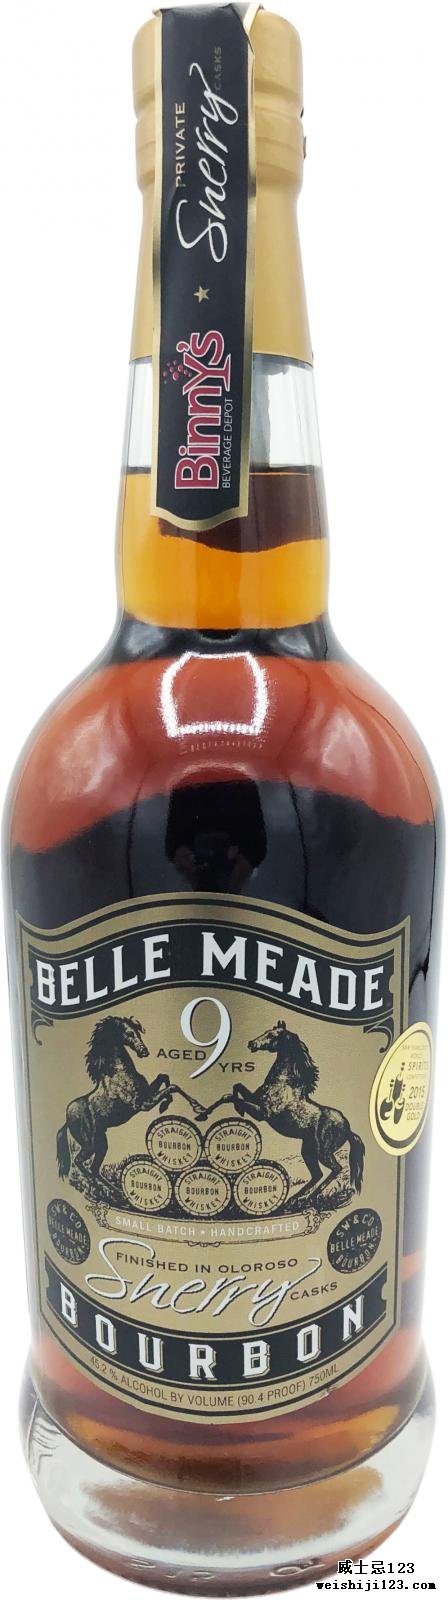 Belle Meade Bourbon 09-year-old